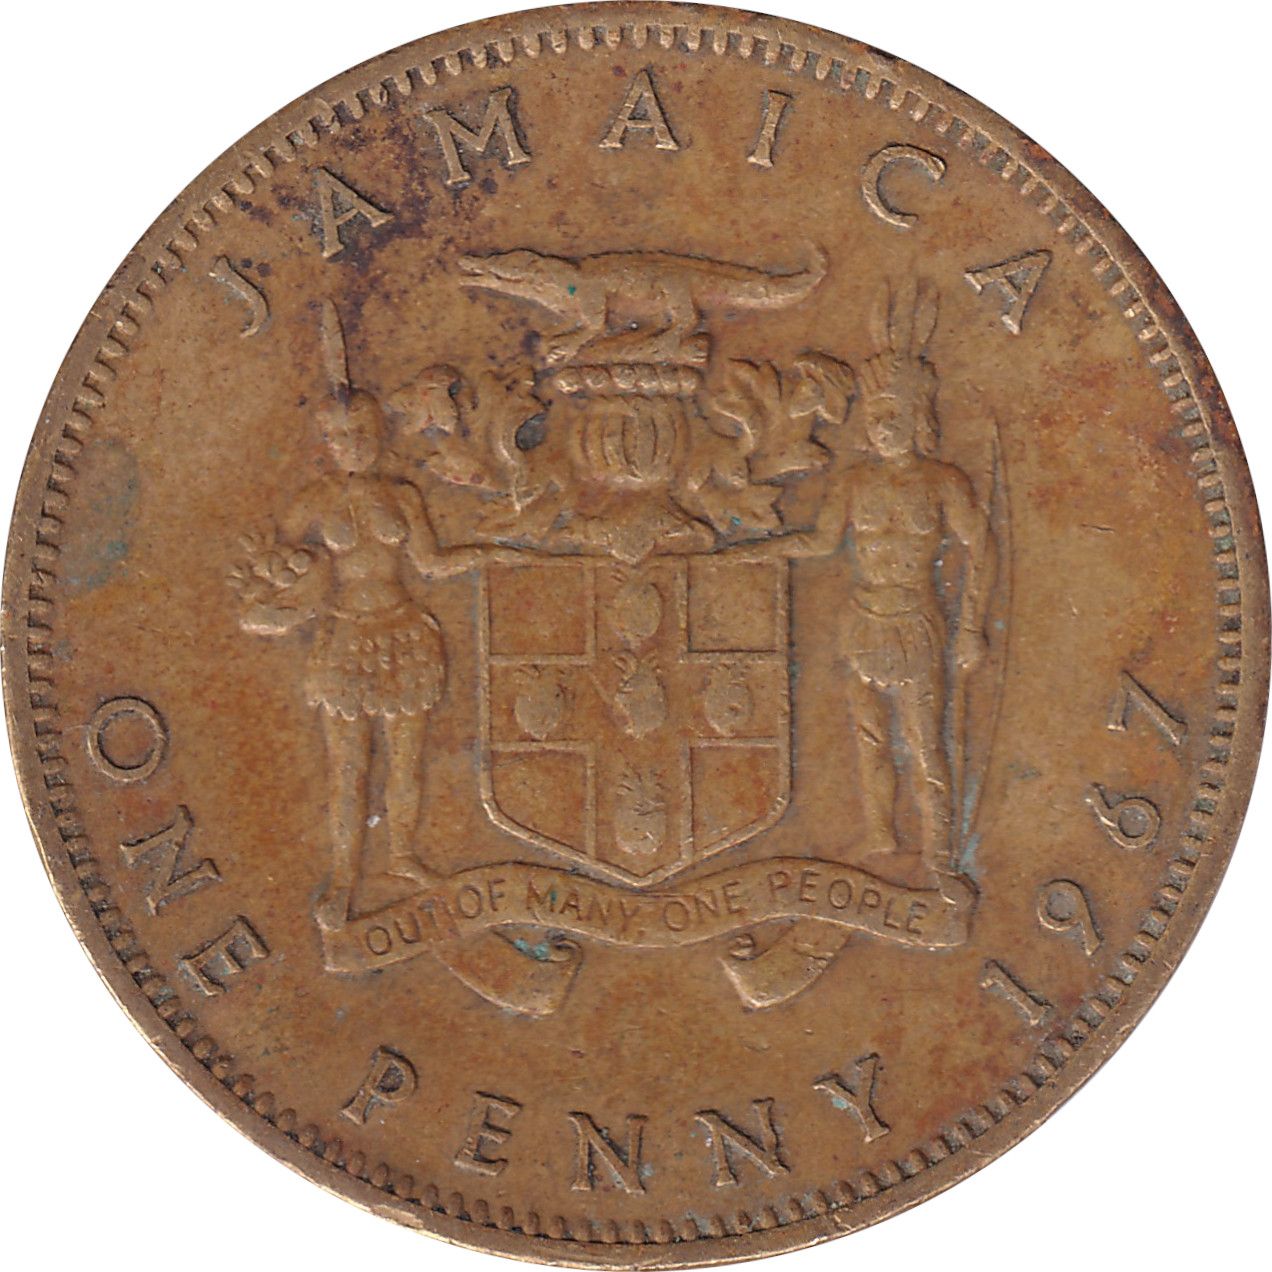 1 penny - Elizabeth II - Armoiries